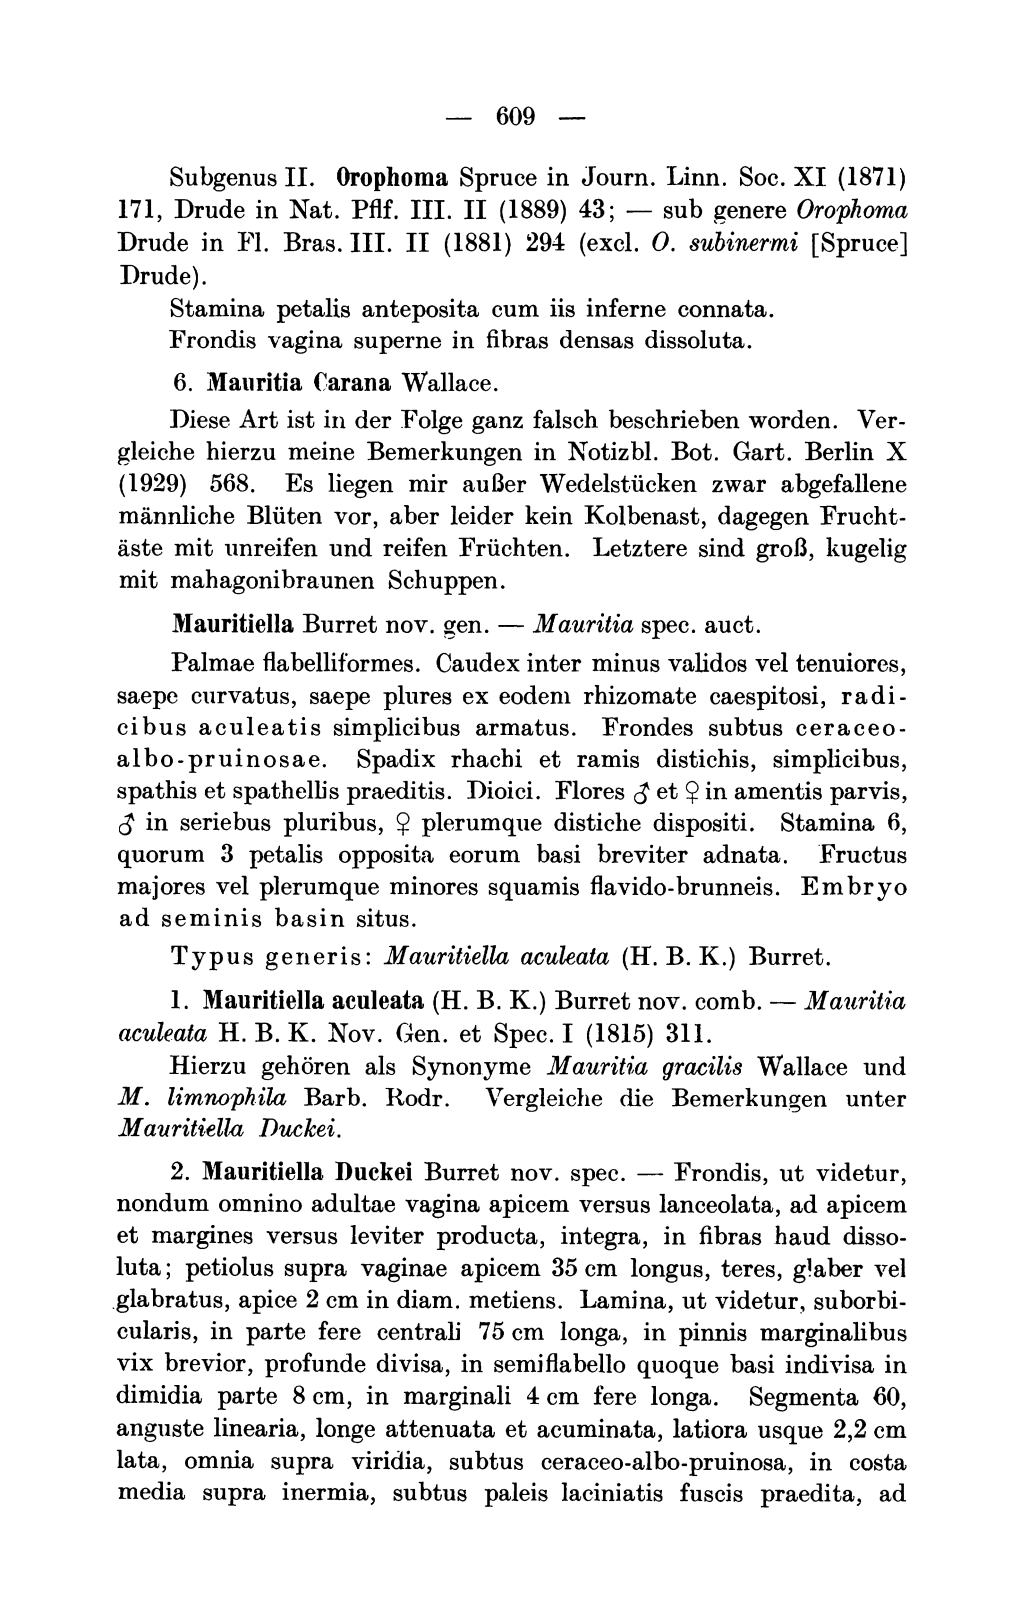 Subgenus IJ. Orophoma Spruce in Journ. Linn. Soc. XI (1871) 171